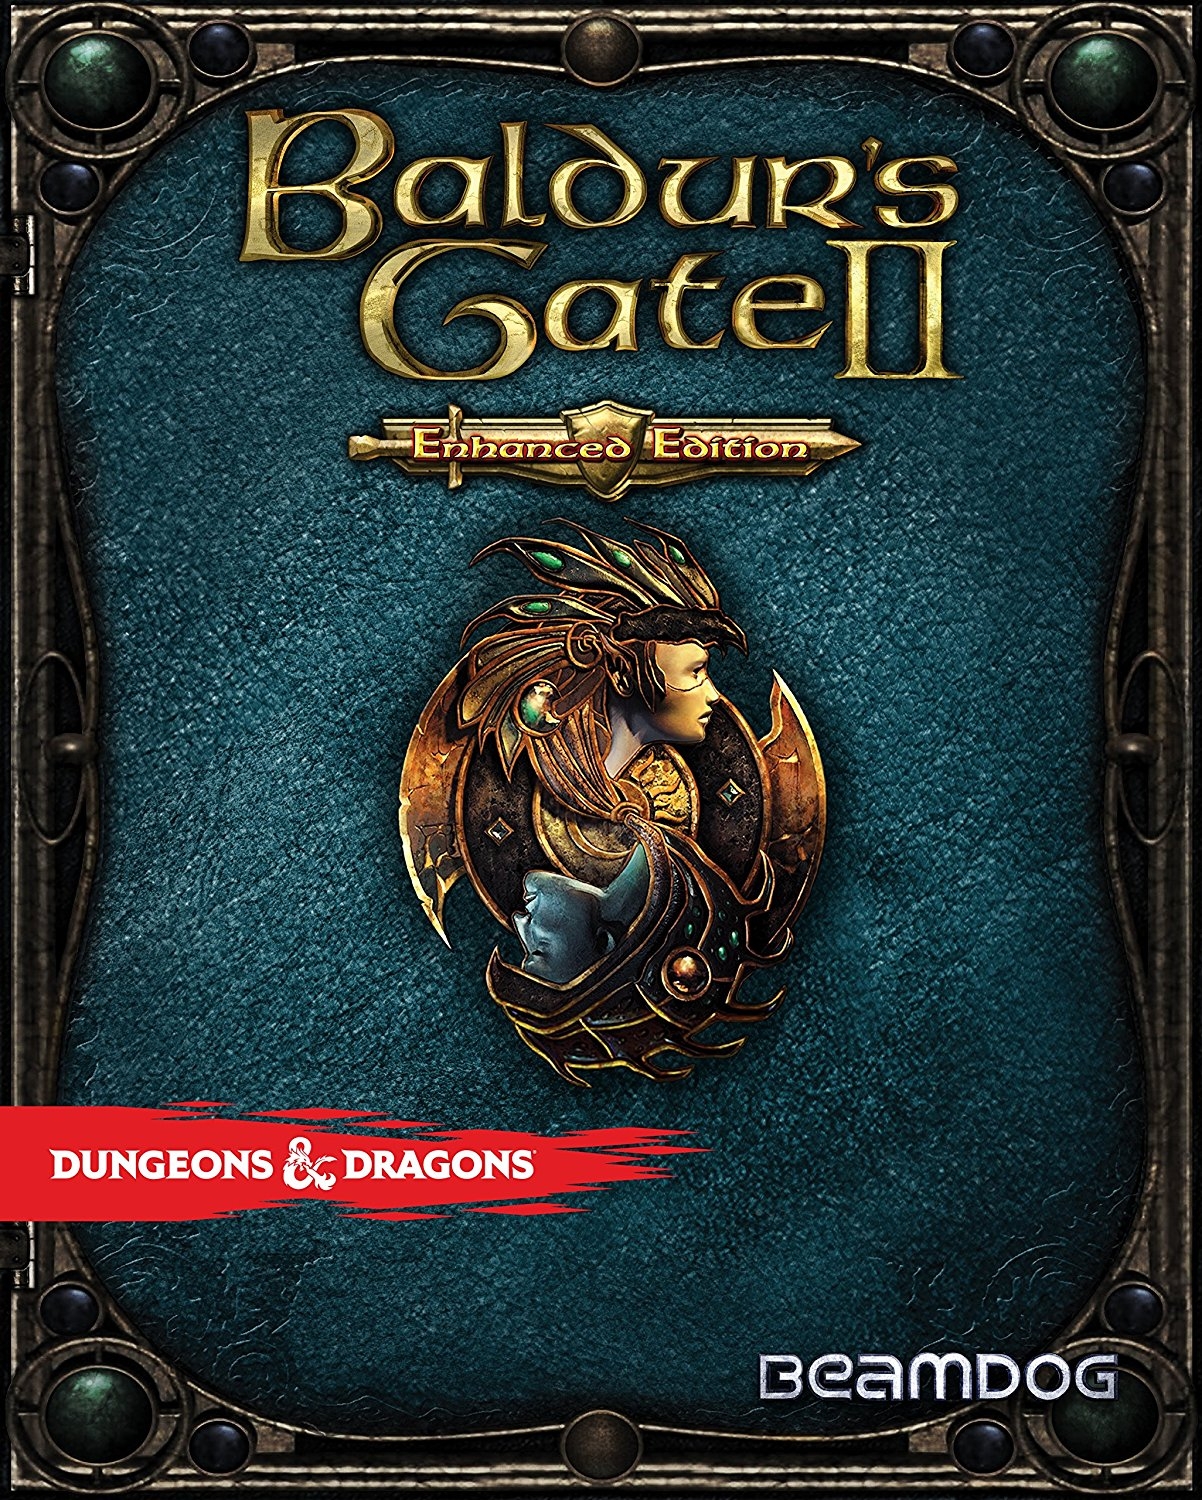 Acheter Baldurs Gate II Edition Steam